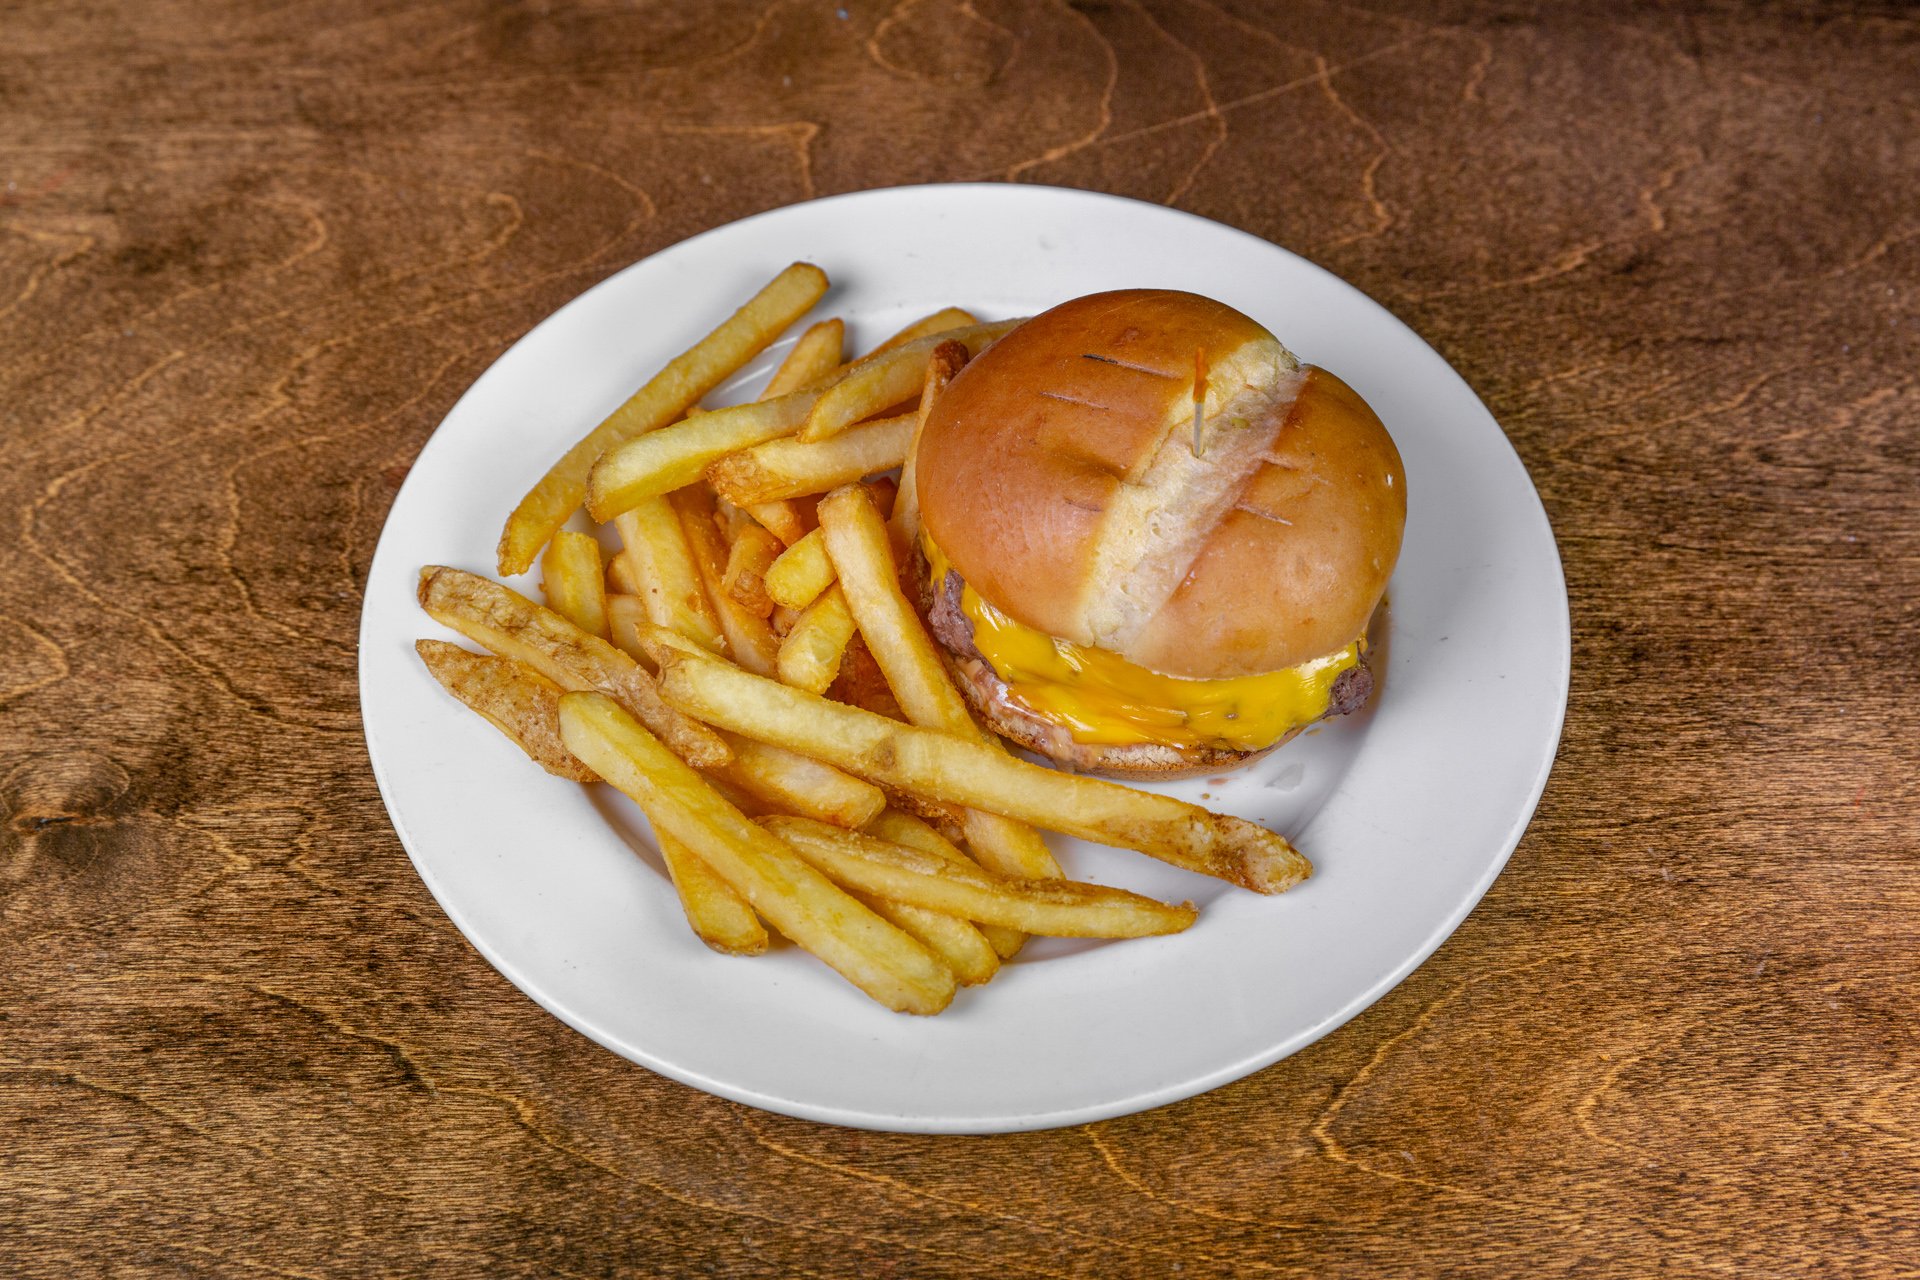 Burger Mania  Premium quality Wing Tender Fries and Burger